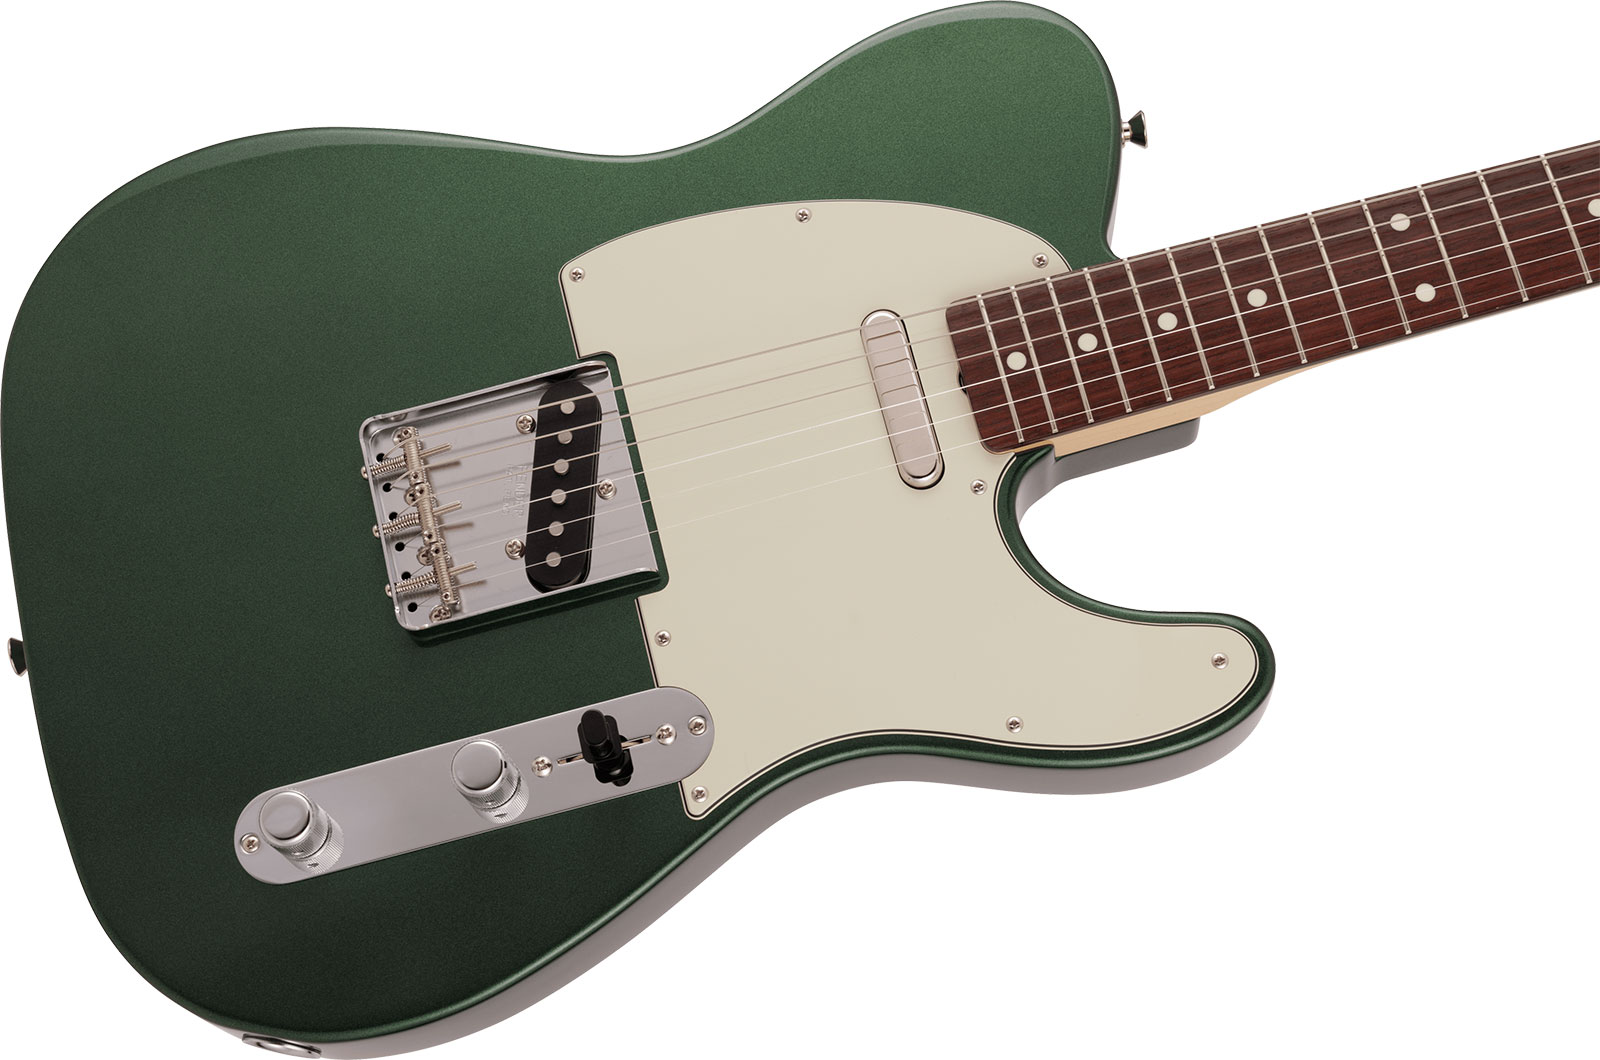 Fender Tele Traditional 60s Mij 2s Ht Rw - Aged Sherwood Green Metallic - Televorm elektrische gitaar - Variation 2